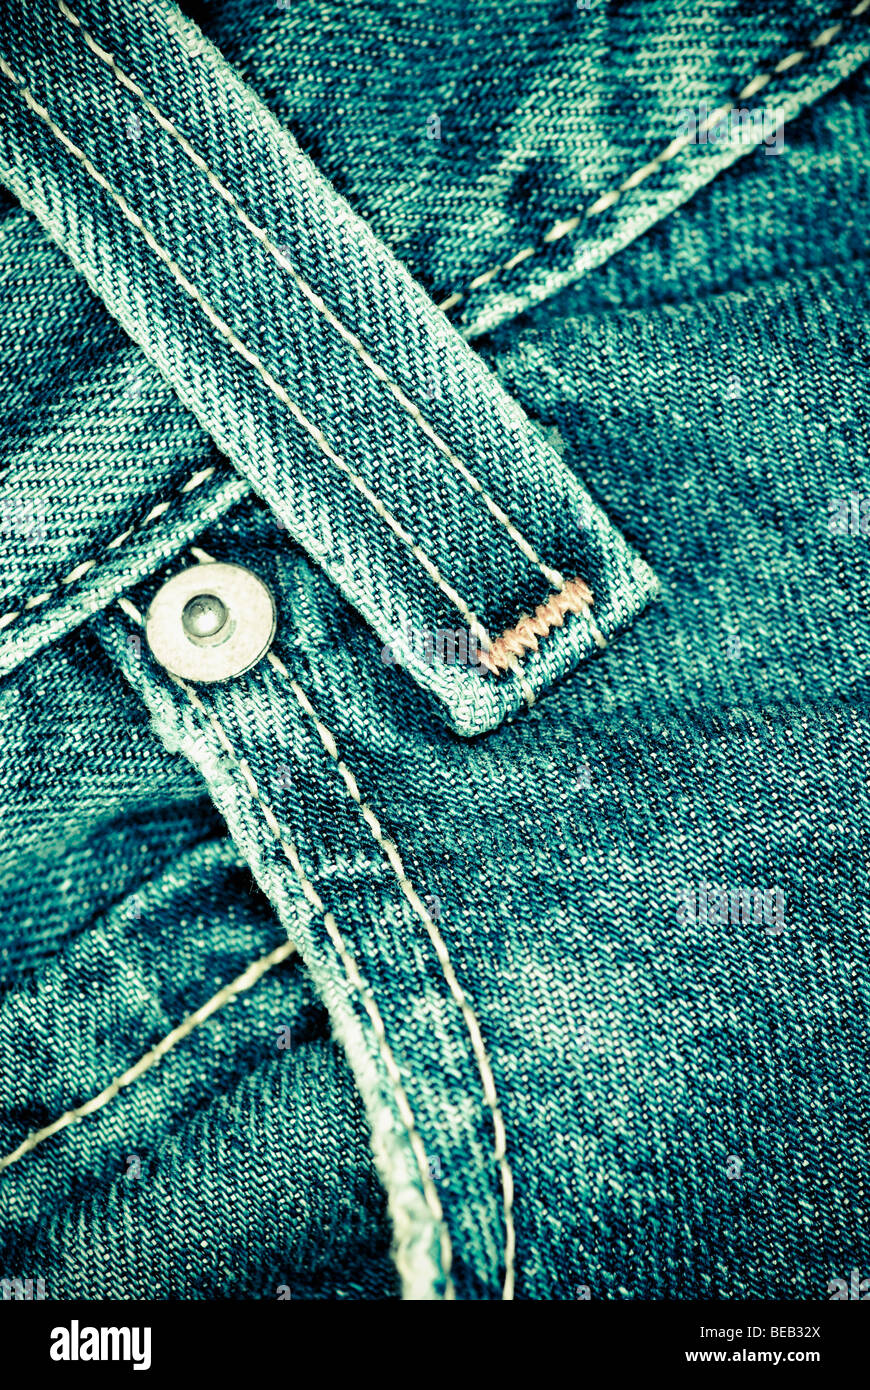 belt loop of denim jeans, close up Stock Photo